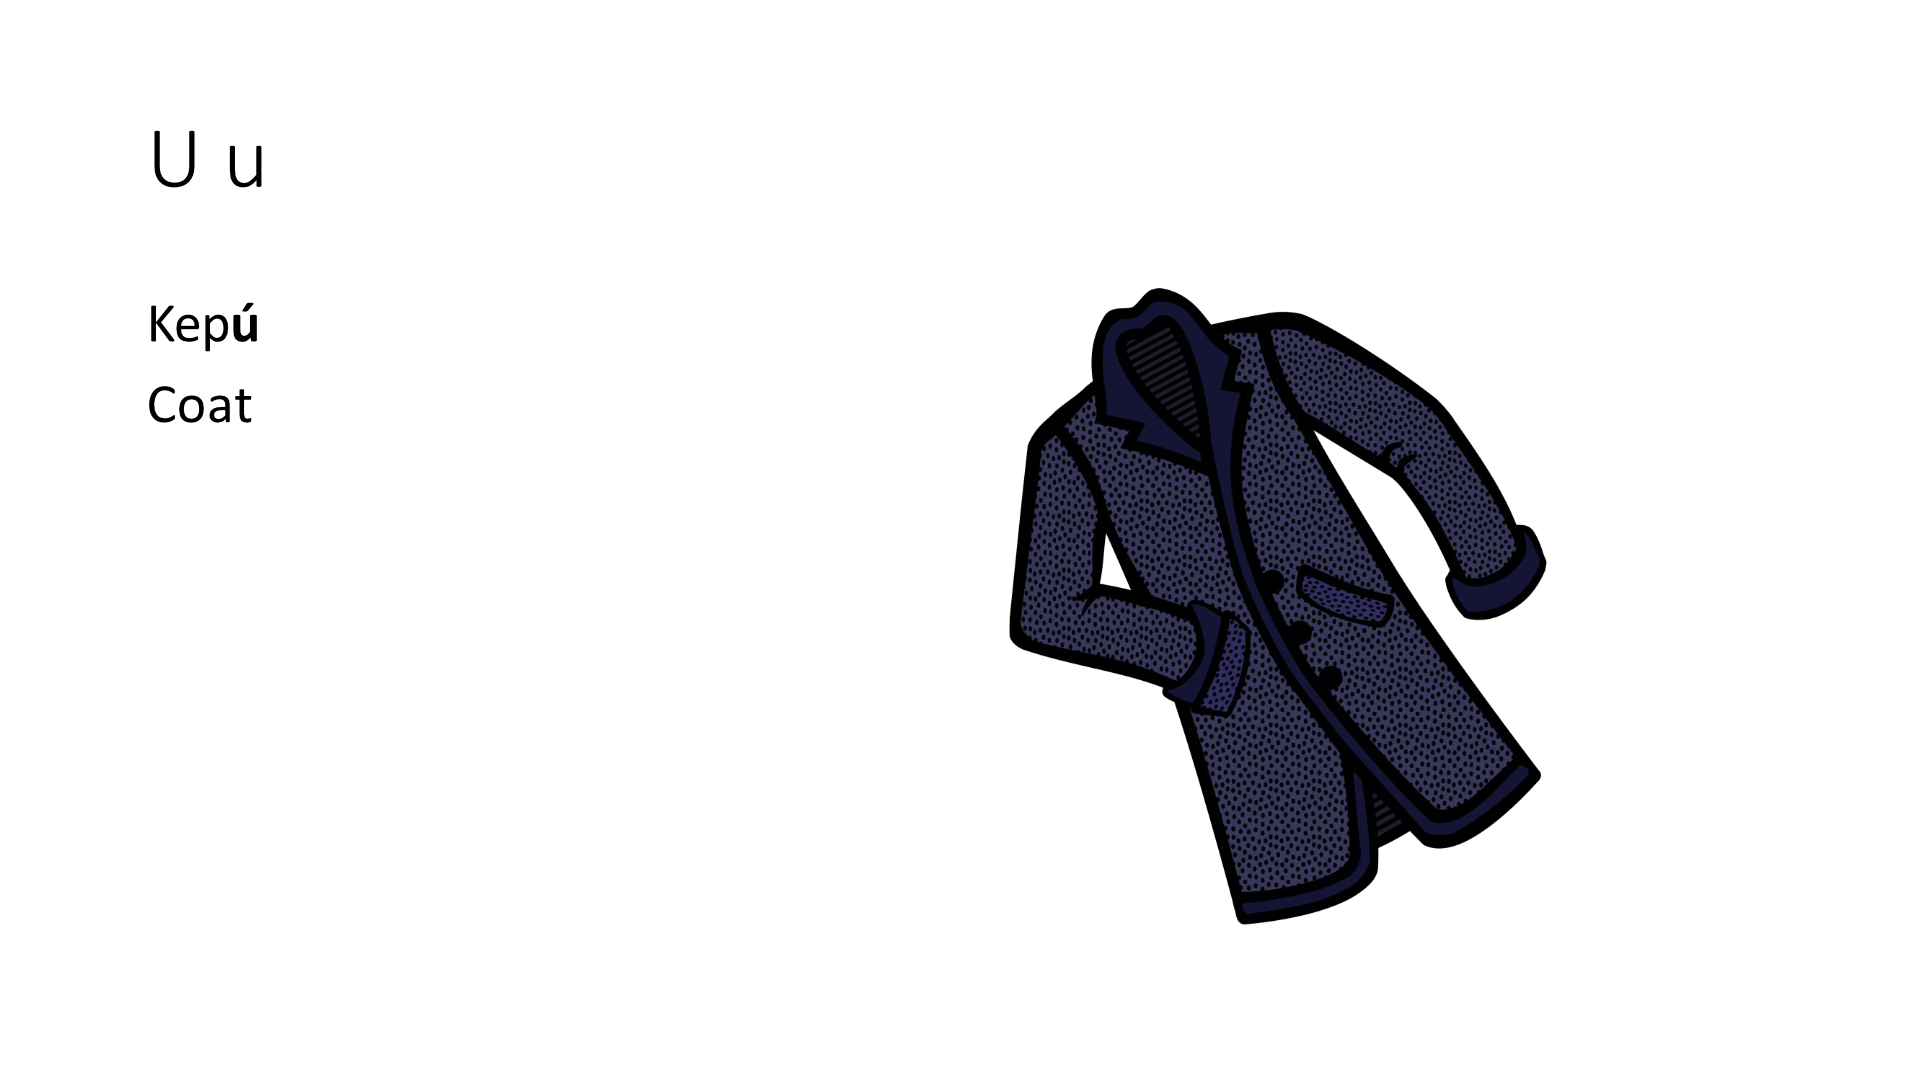 Illustration of a coat